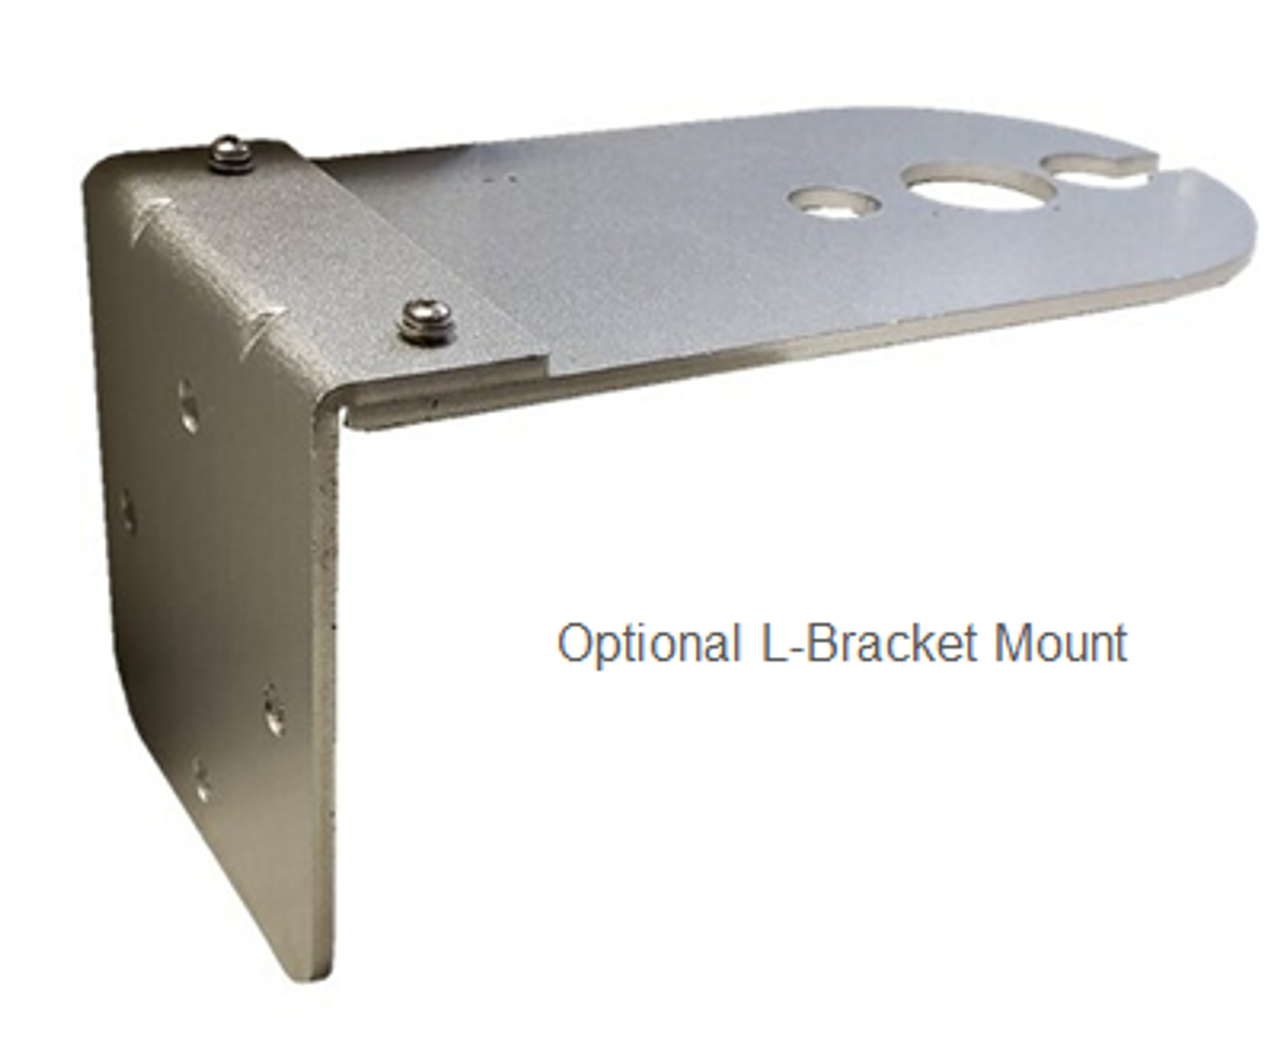 Optional L-Bracket Mount